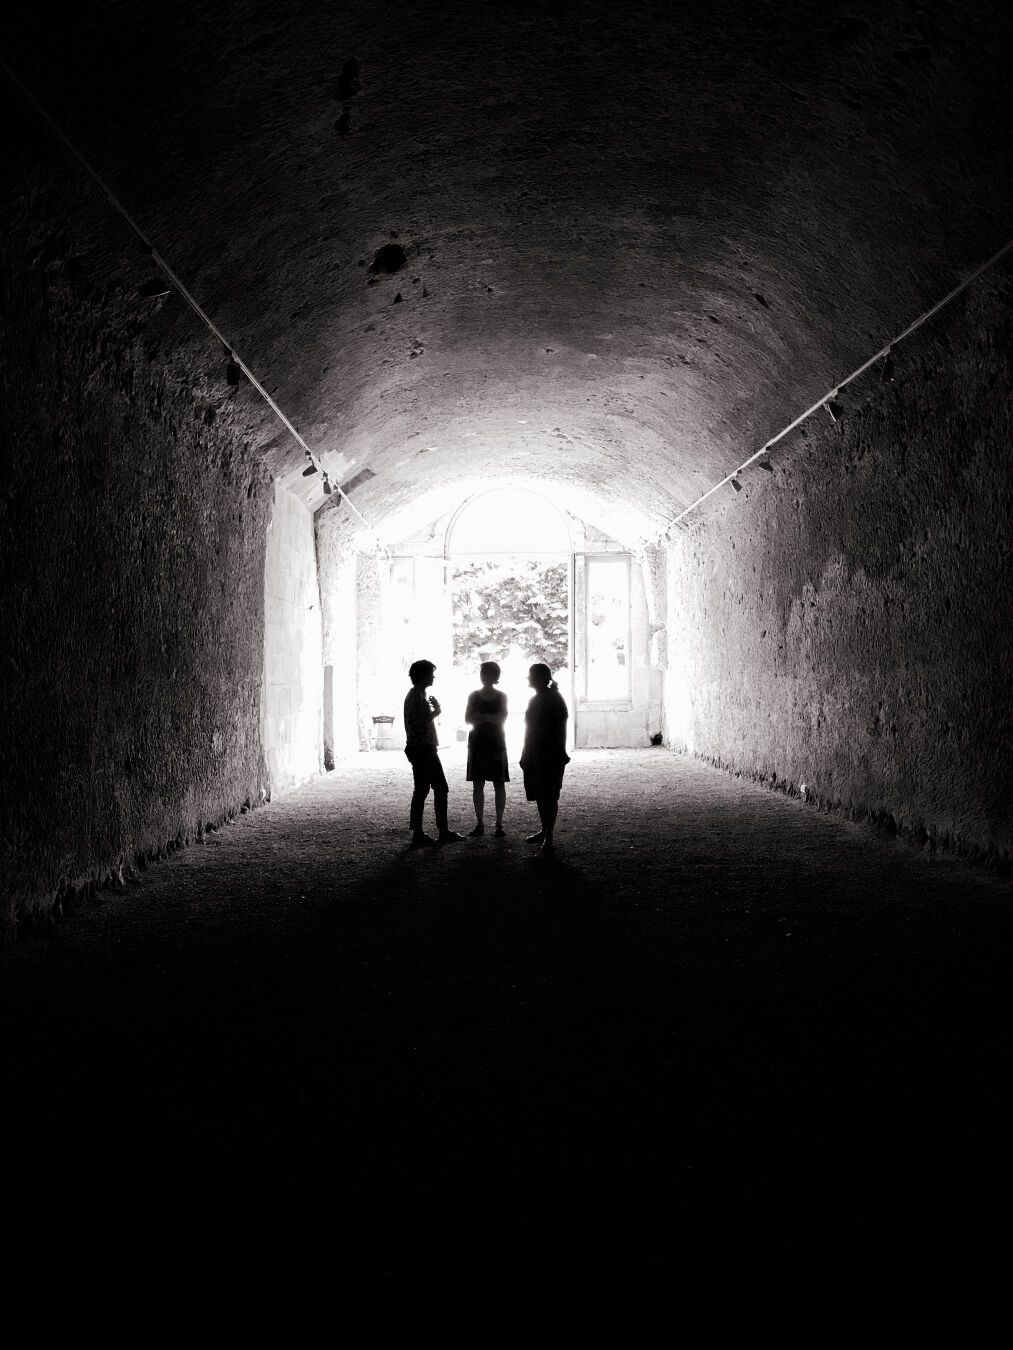 Three in a tunnel

#schwarzweiss #blackandwhite #monochrome #photography